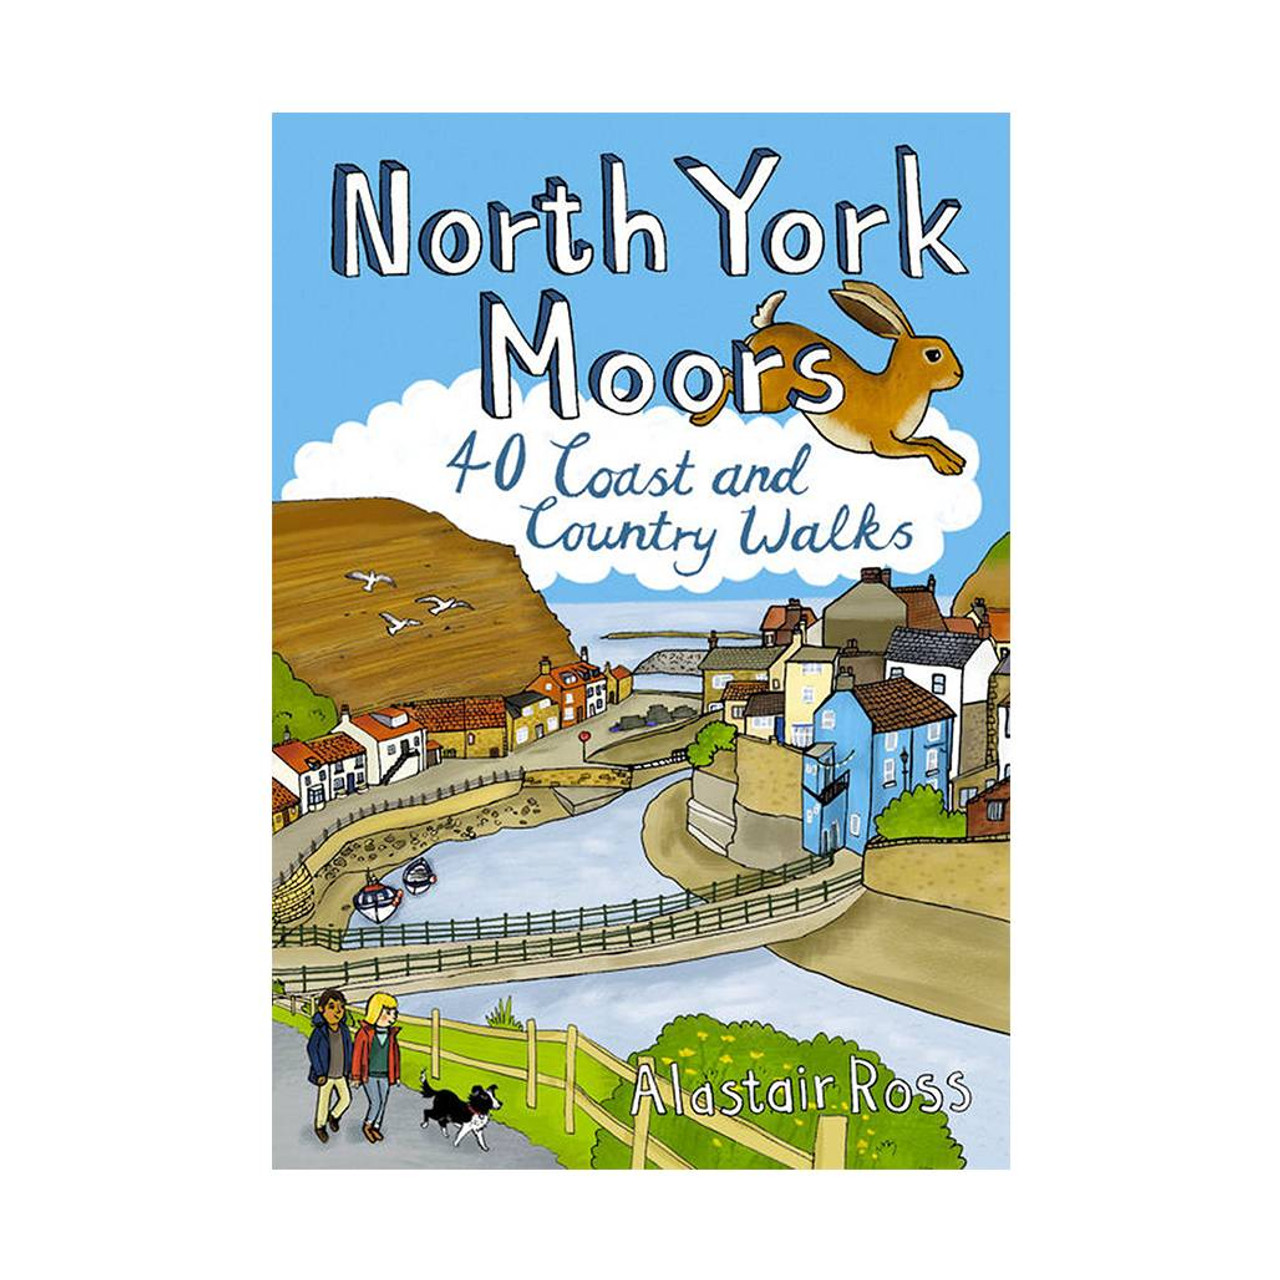 North York Moors: 40 CoastandCountry Walks